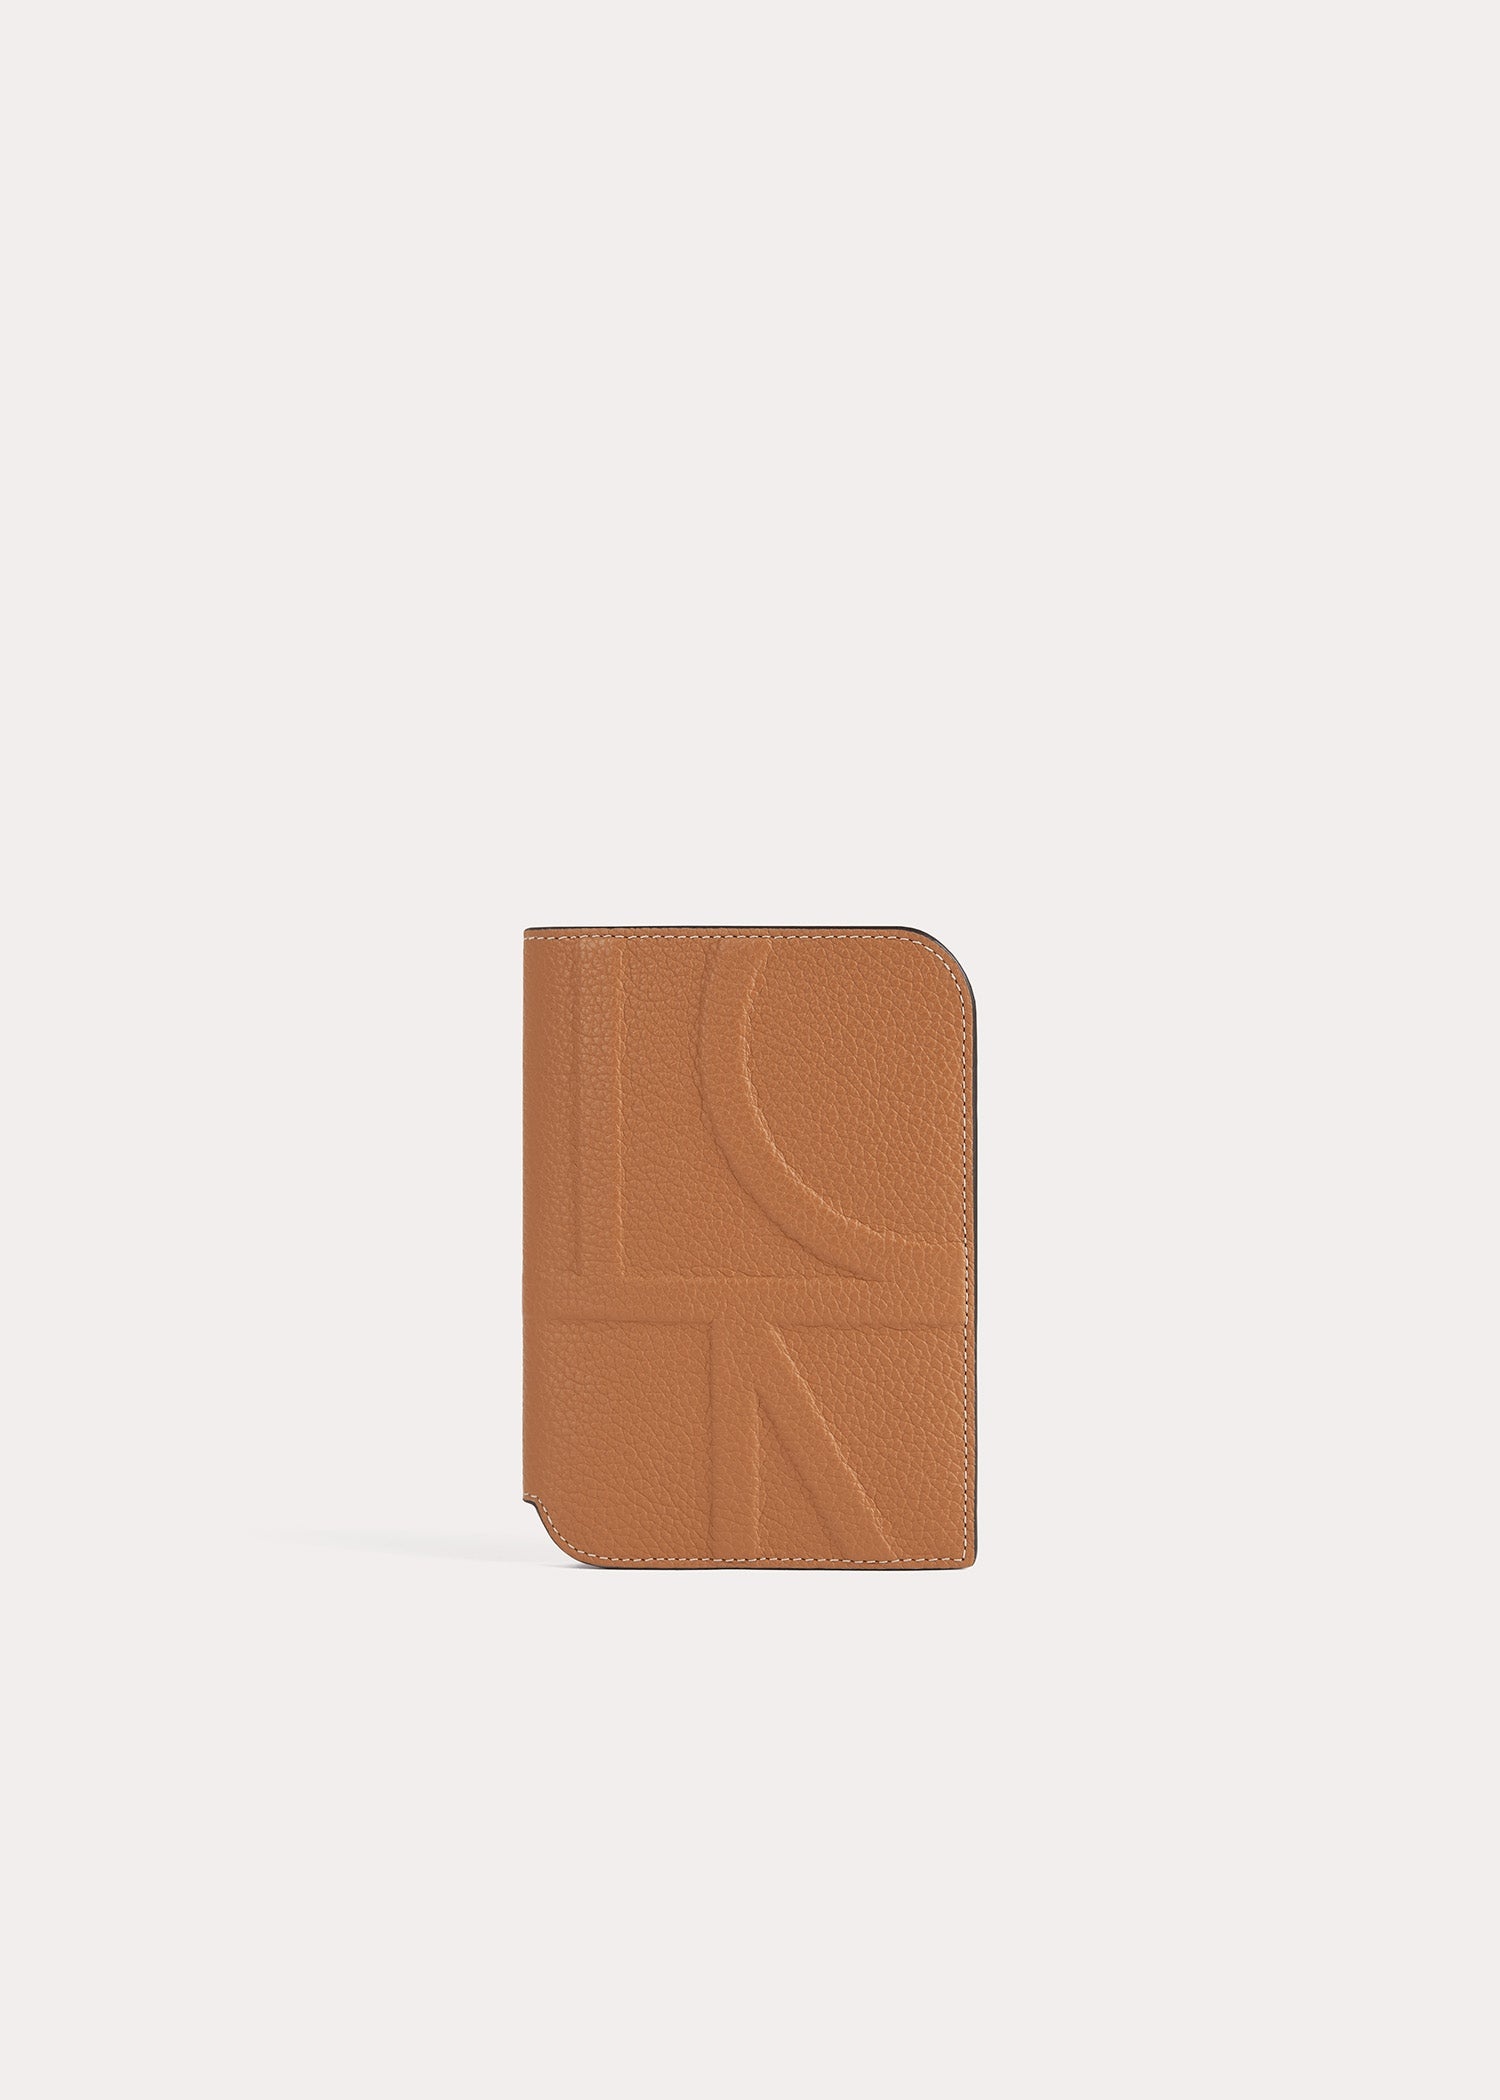 Monogram leather passport holder tan grain - 1